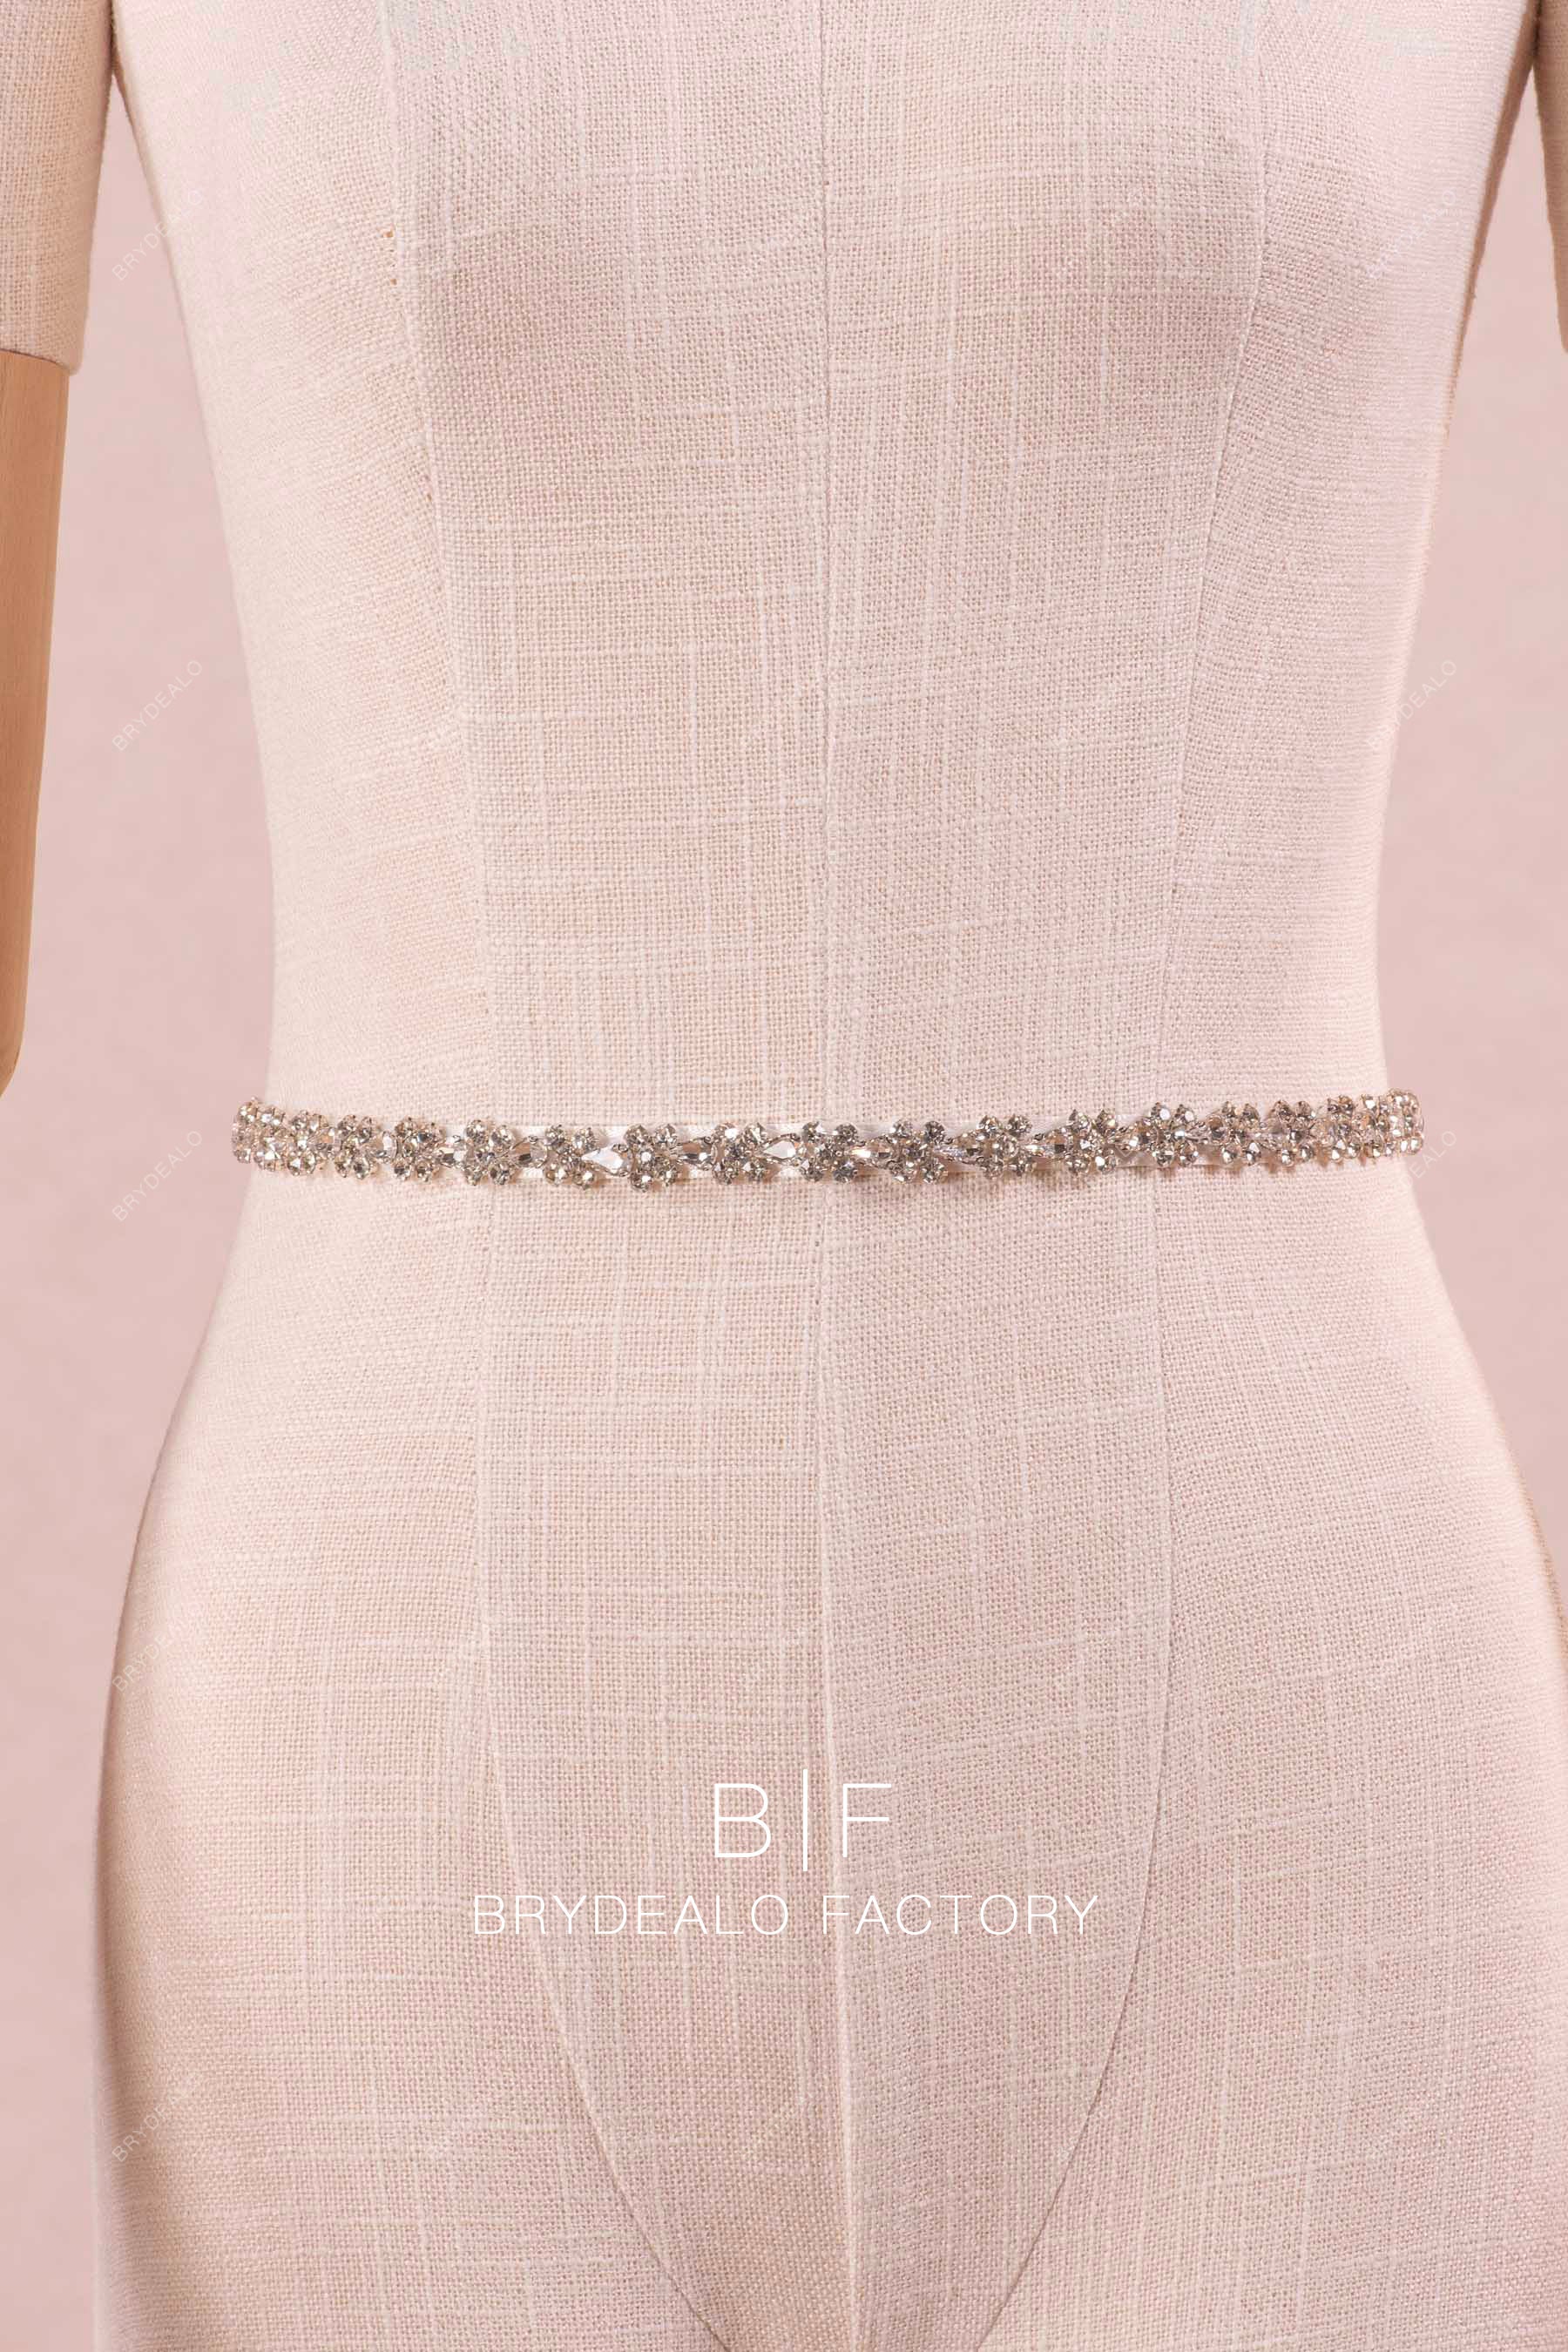 narrow rhinestone bridal belt